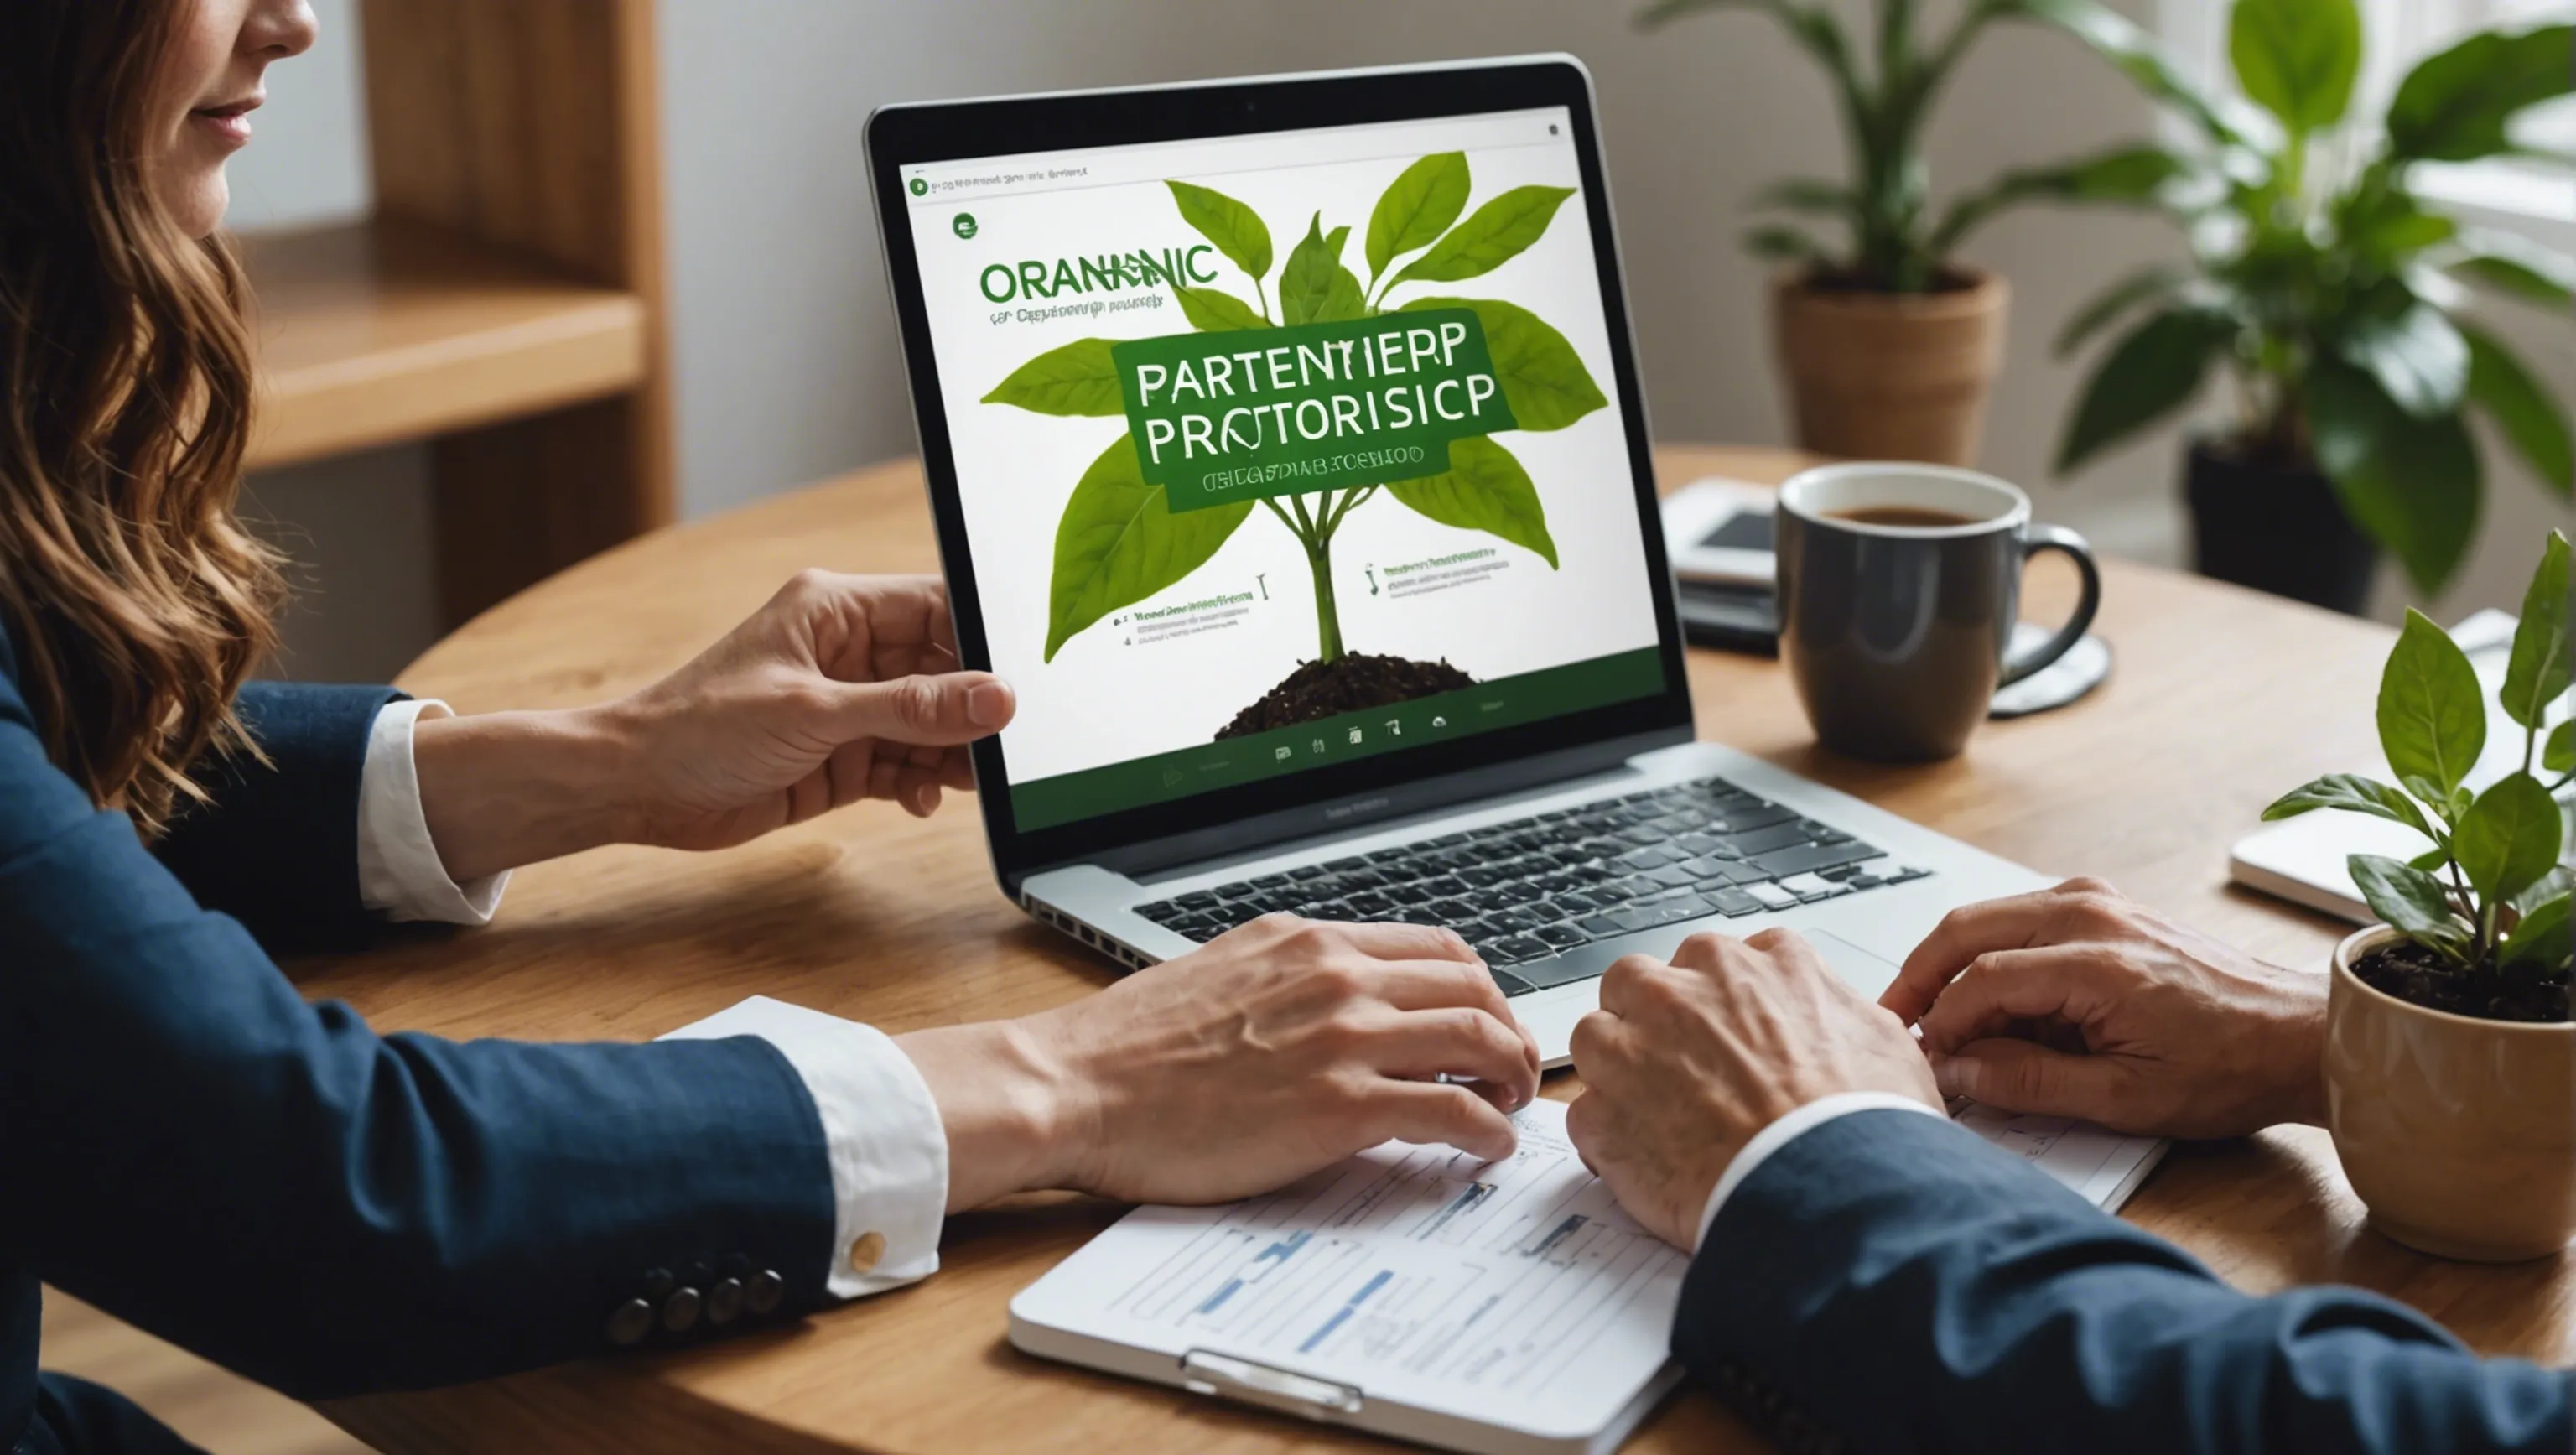 Partnership for Organic Rankings